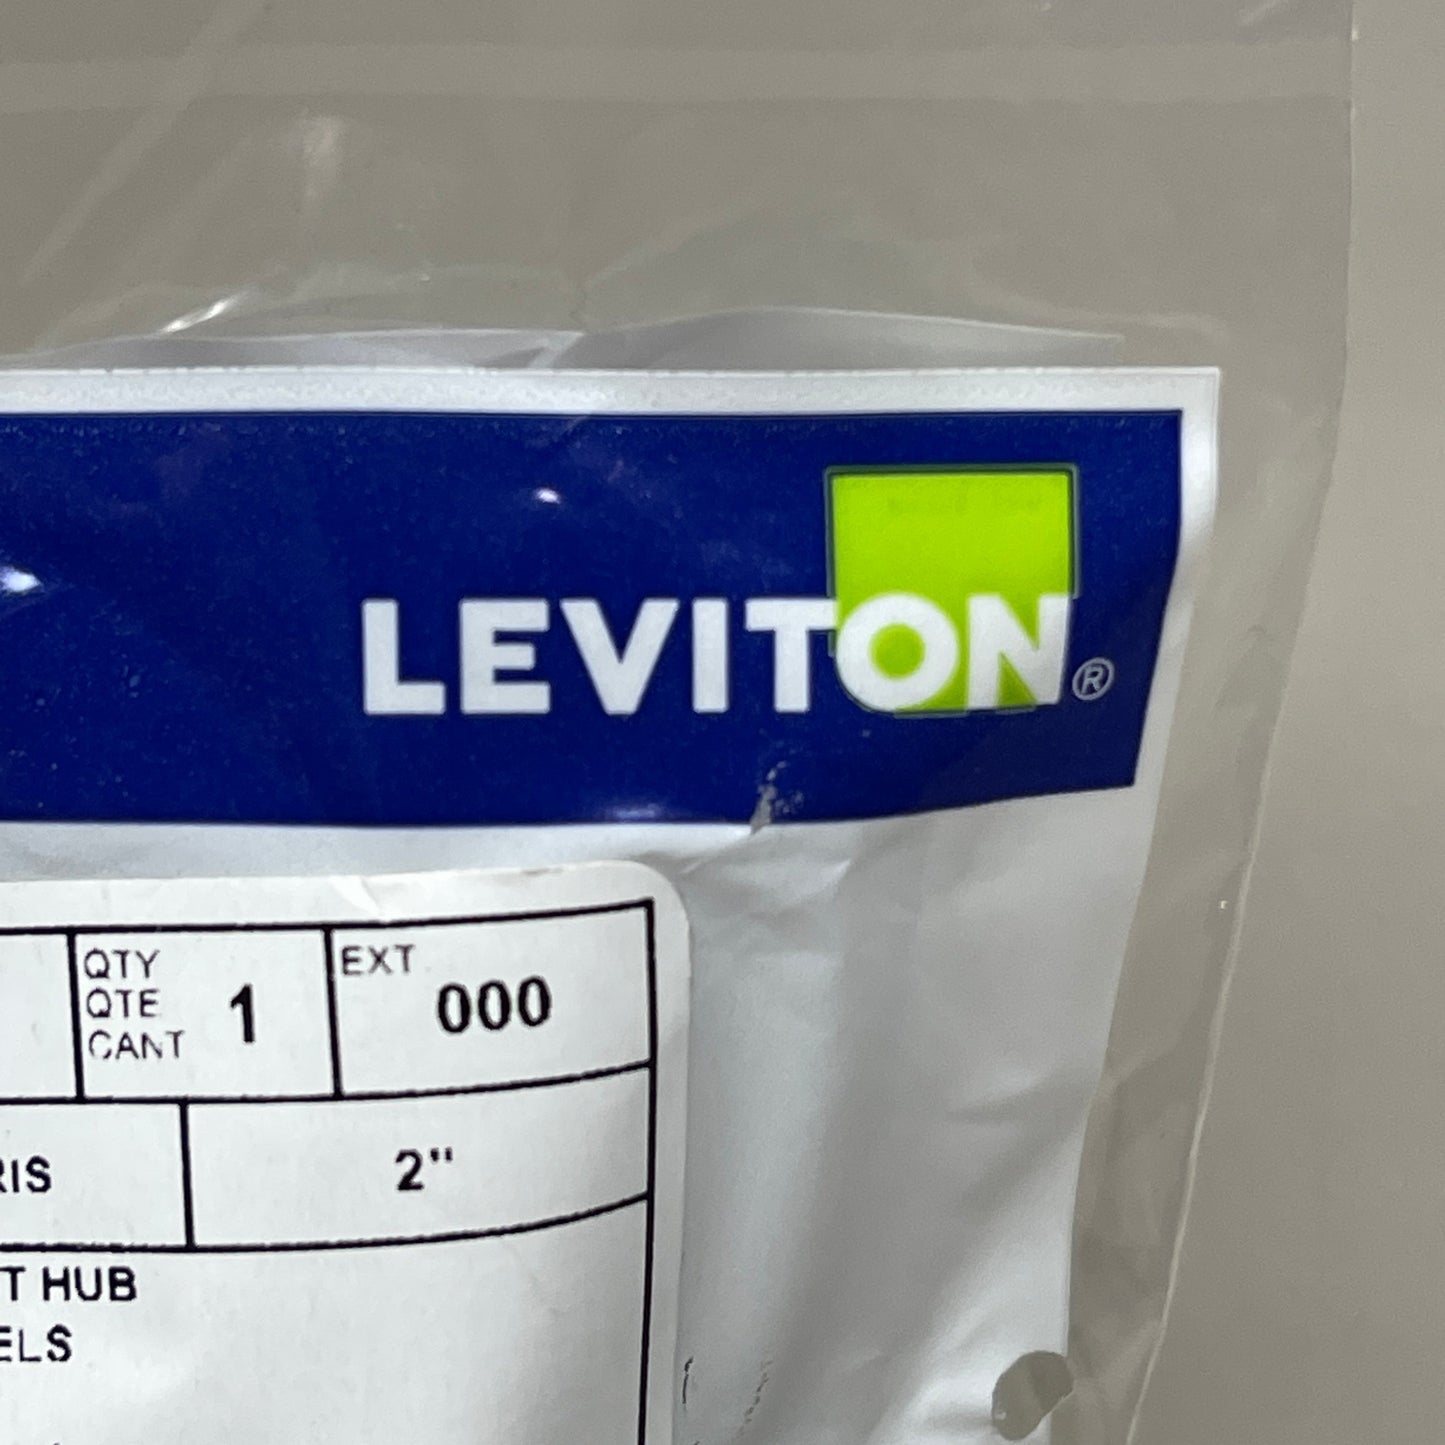 LEVITON Rainproof 2" Conduit Hub for Outdoor Panels 000-LHB02 (New)